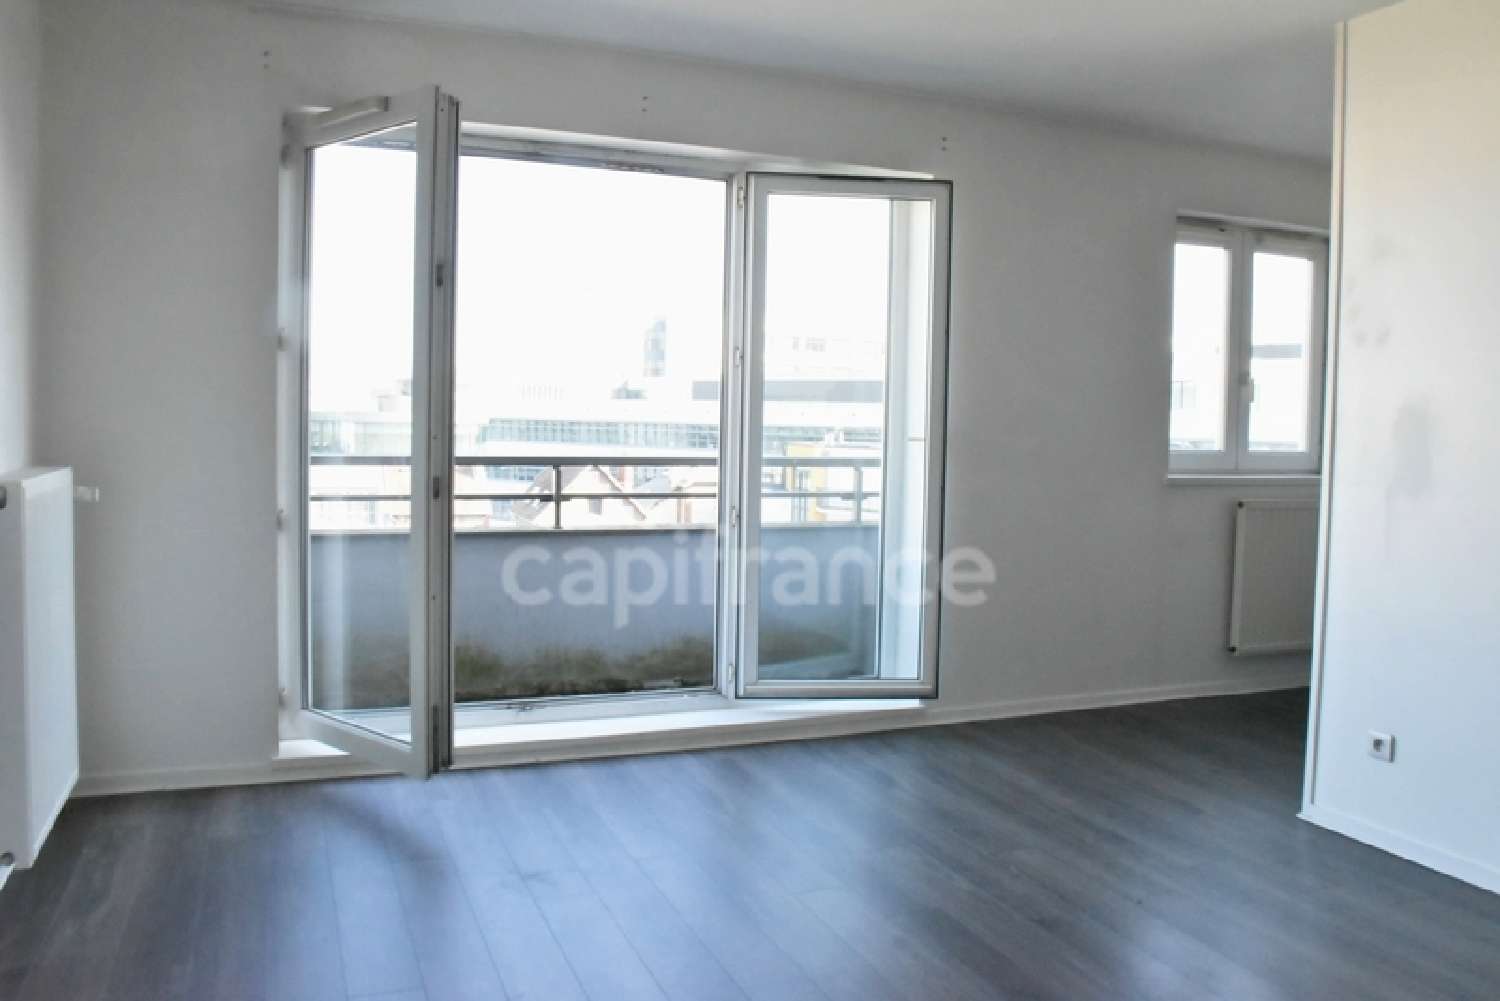  for sale apartment Rouen 76100 Seine-Maritime 1